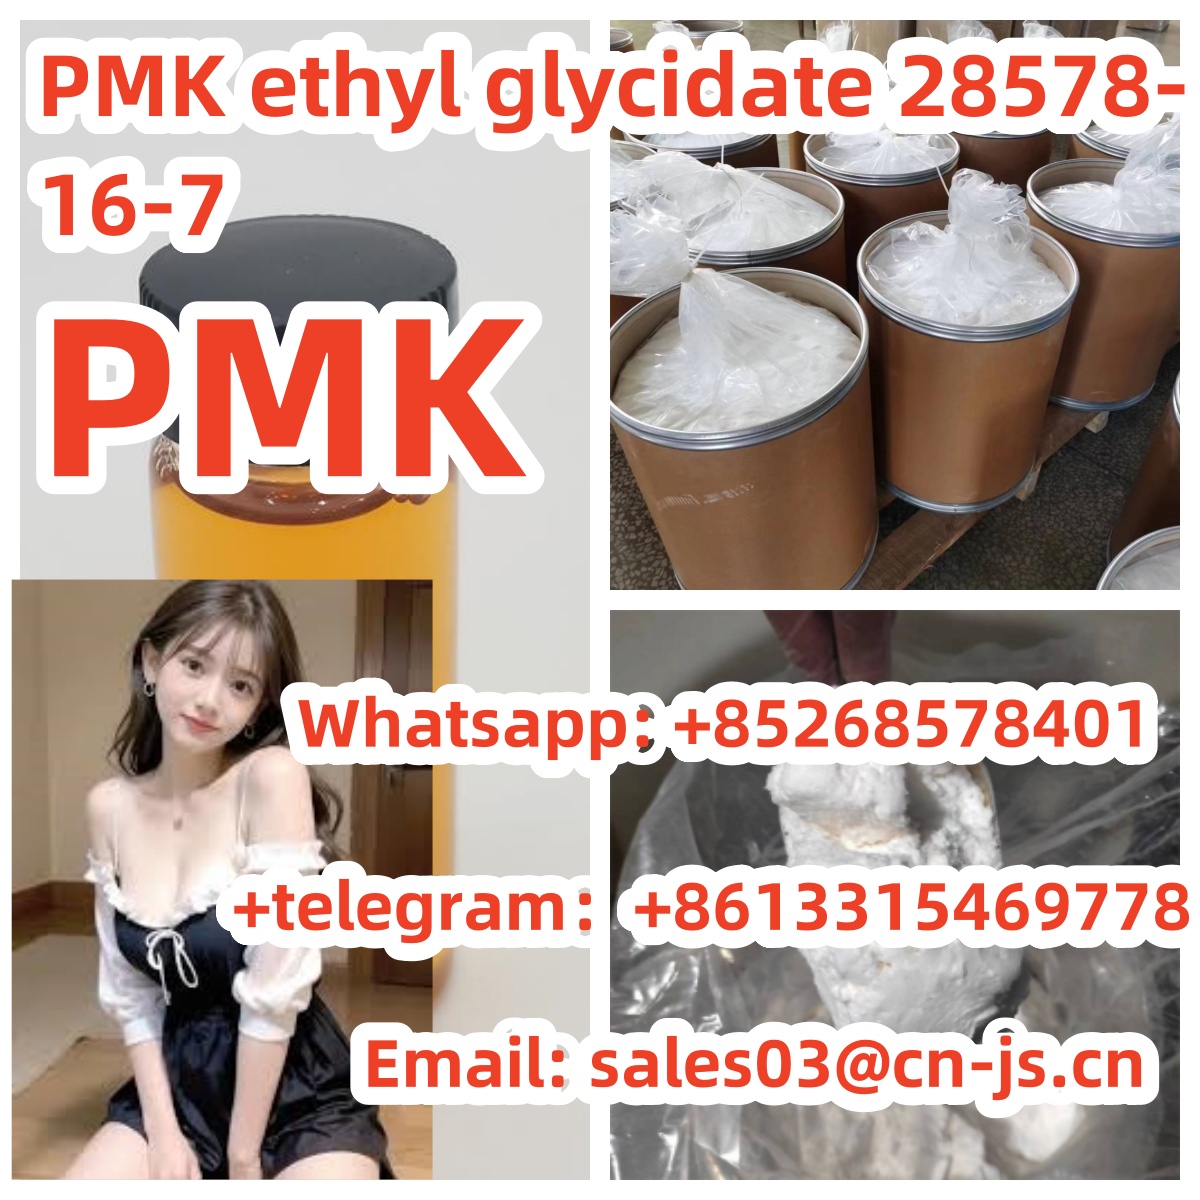 Big discounts PMK ethyl glycidate 28578-16-7 ,111,Pets,Free Classifieds,Post Free Ads,77traders.com